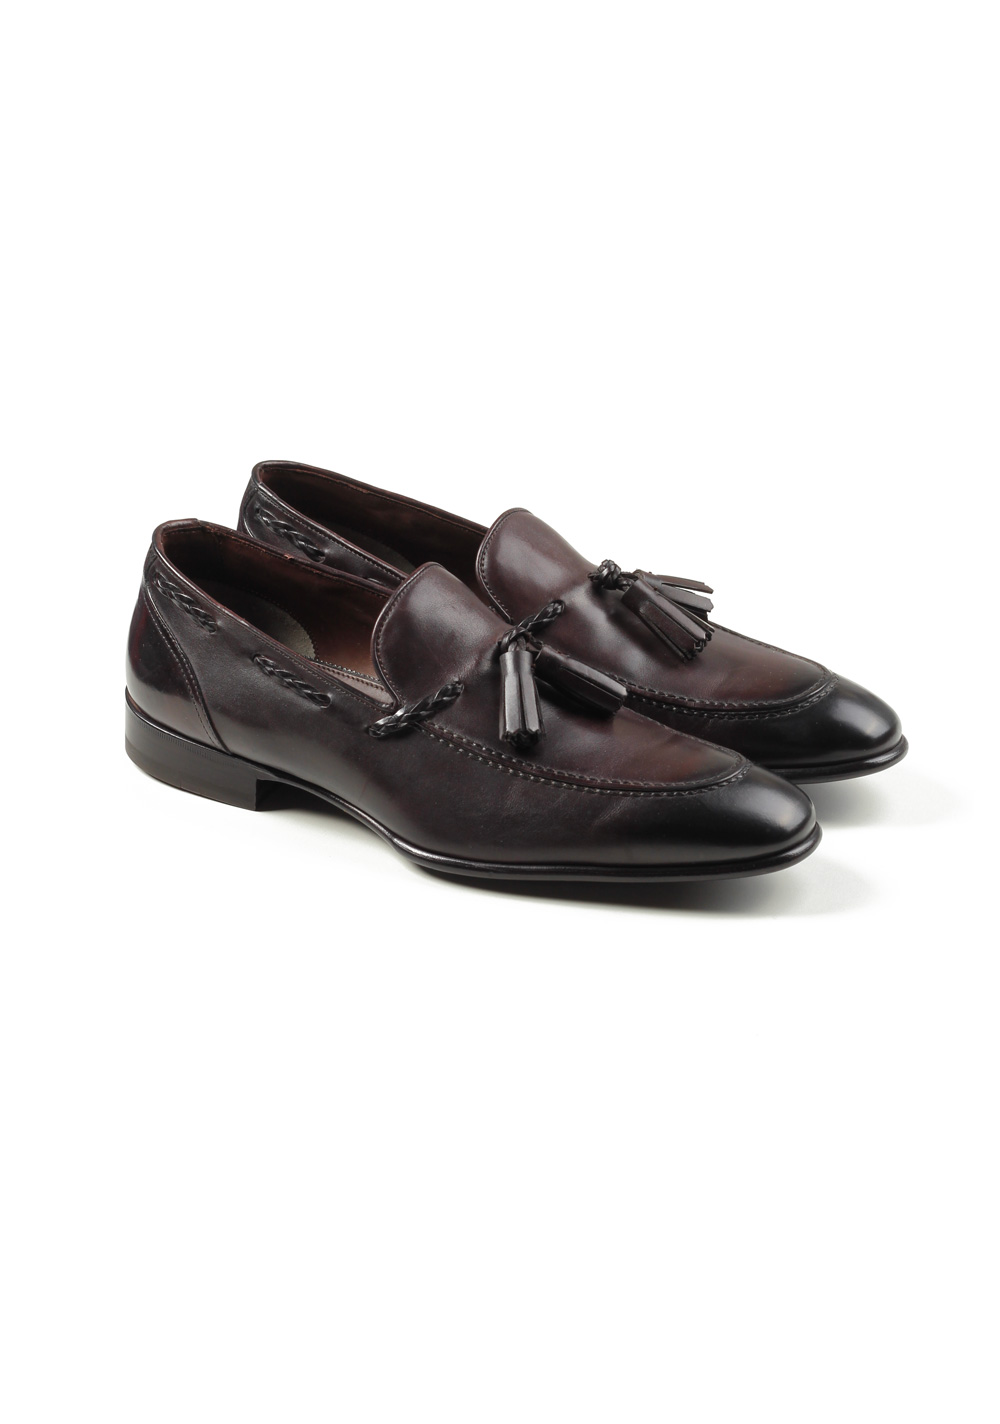 TOM FORD Adney Tassel Loafers Shoes Size 10T Uk / 11T U.S. | Costume Limité